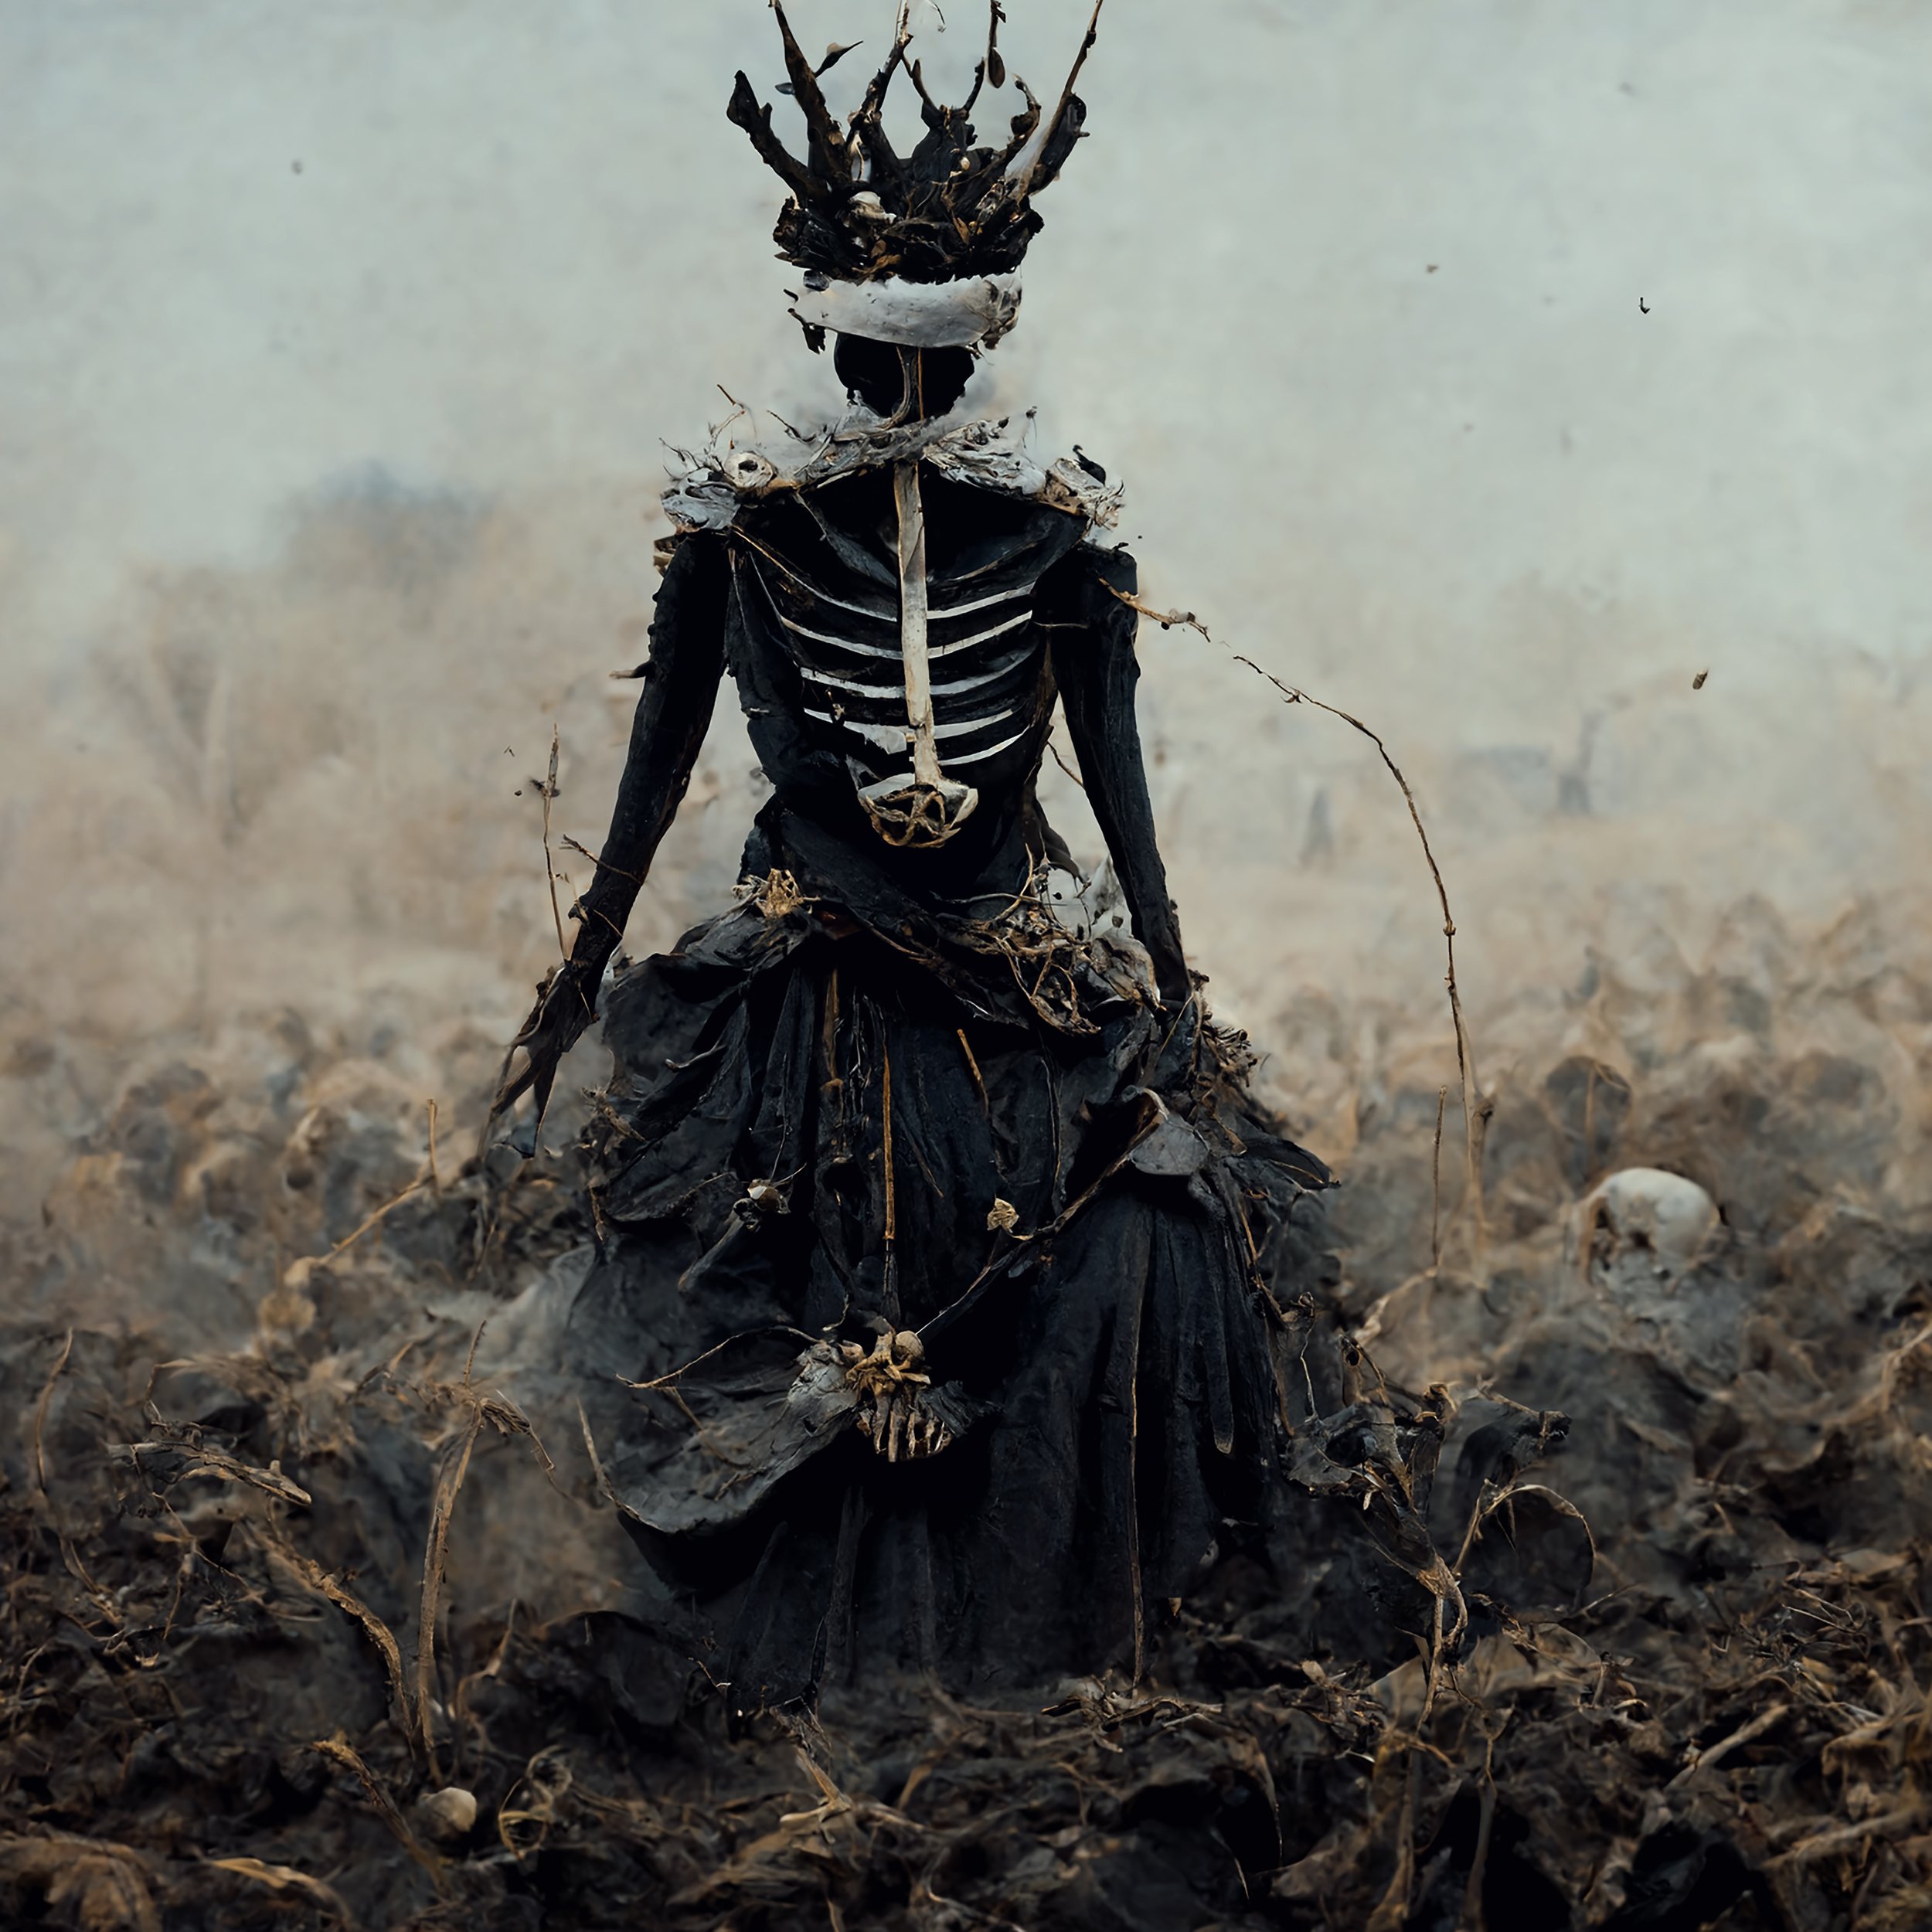 BrilliantImages_worn_out_black_skeleton_wearing_pearl_crown_dan_df106305-6d49-47c5-a1f7-93dcc0db6c19 copy.jpg